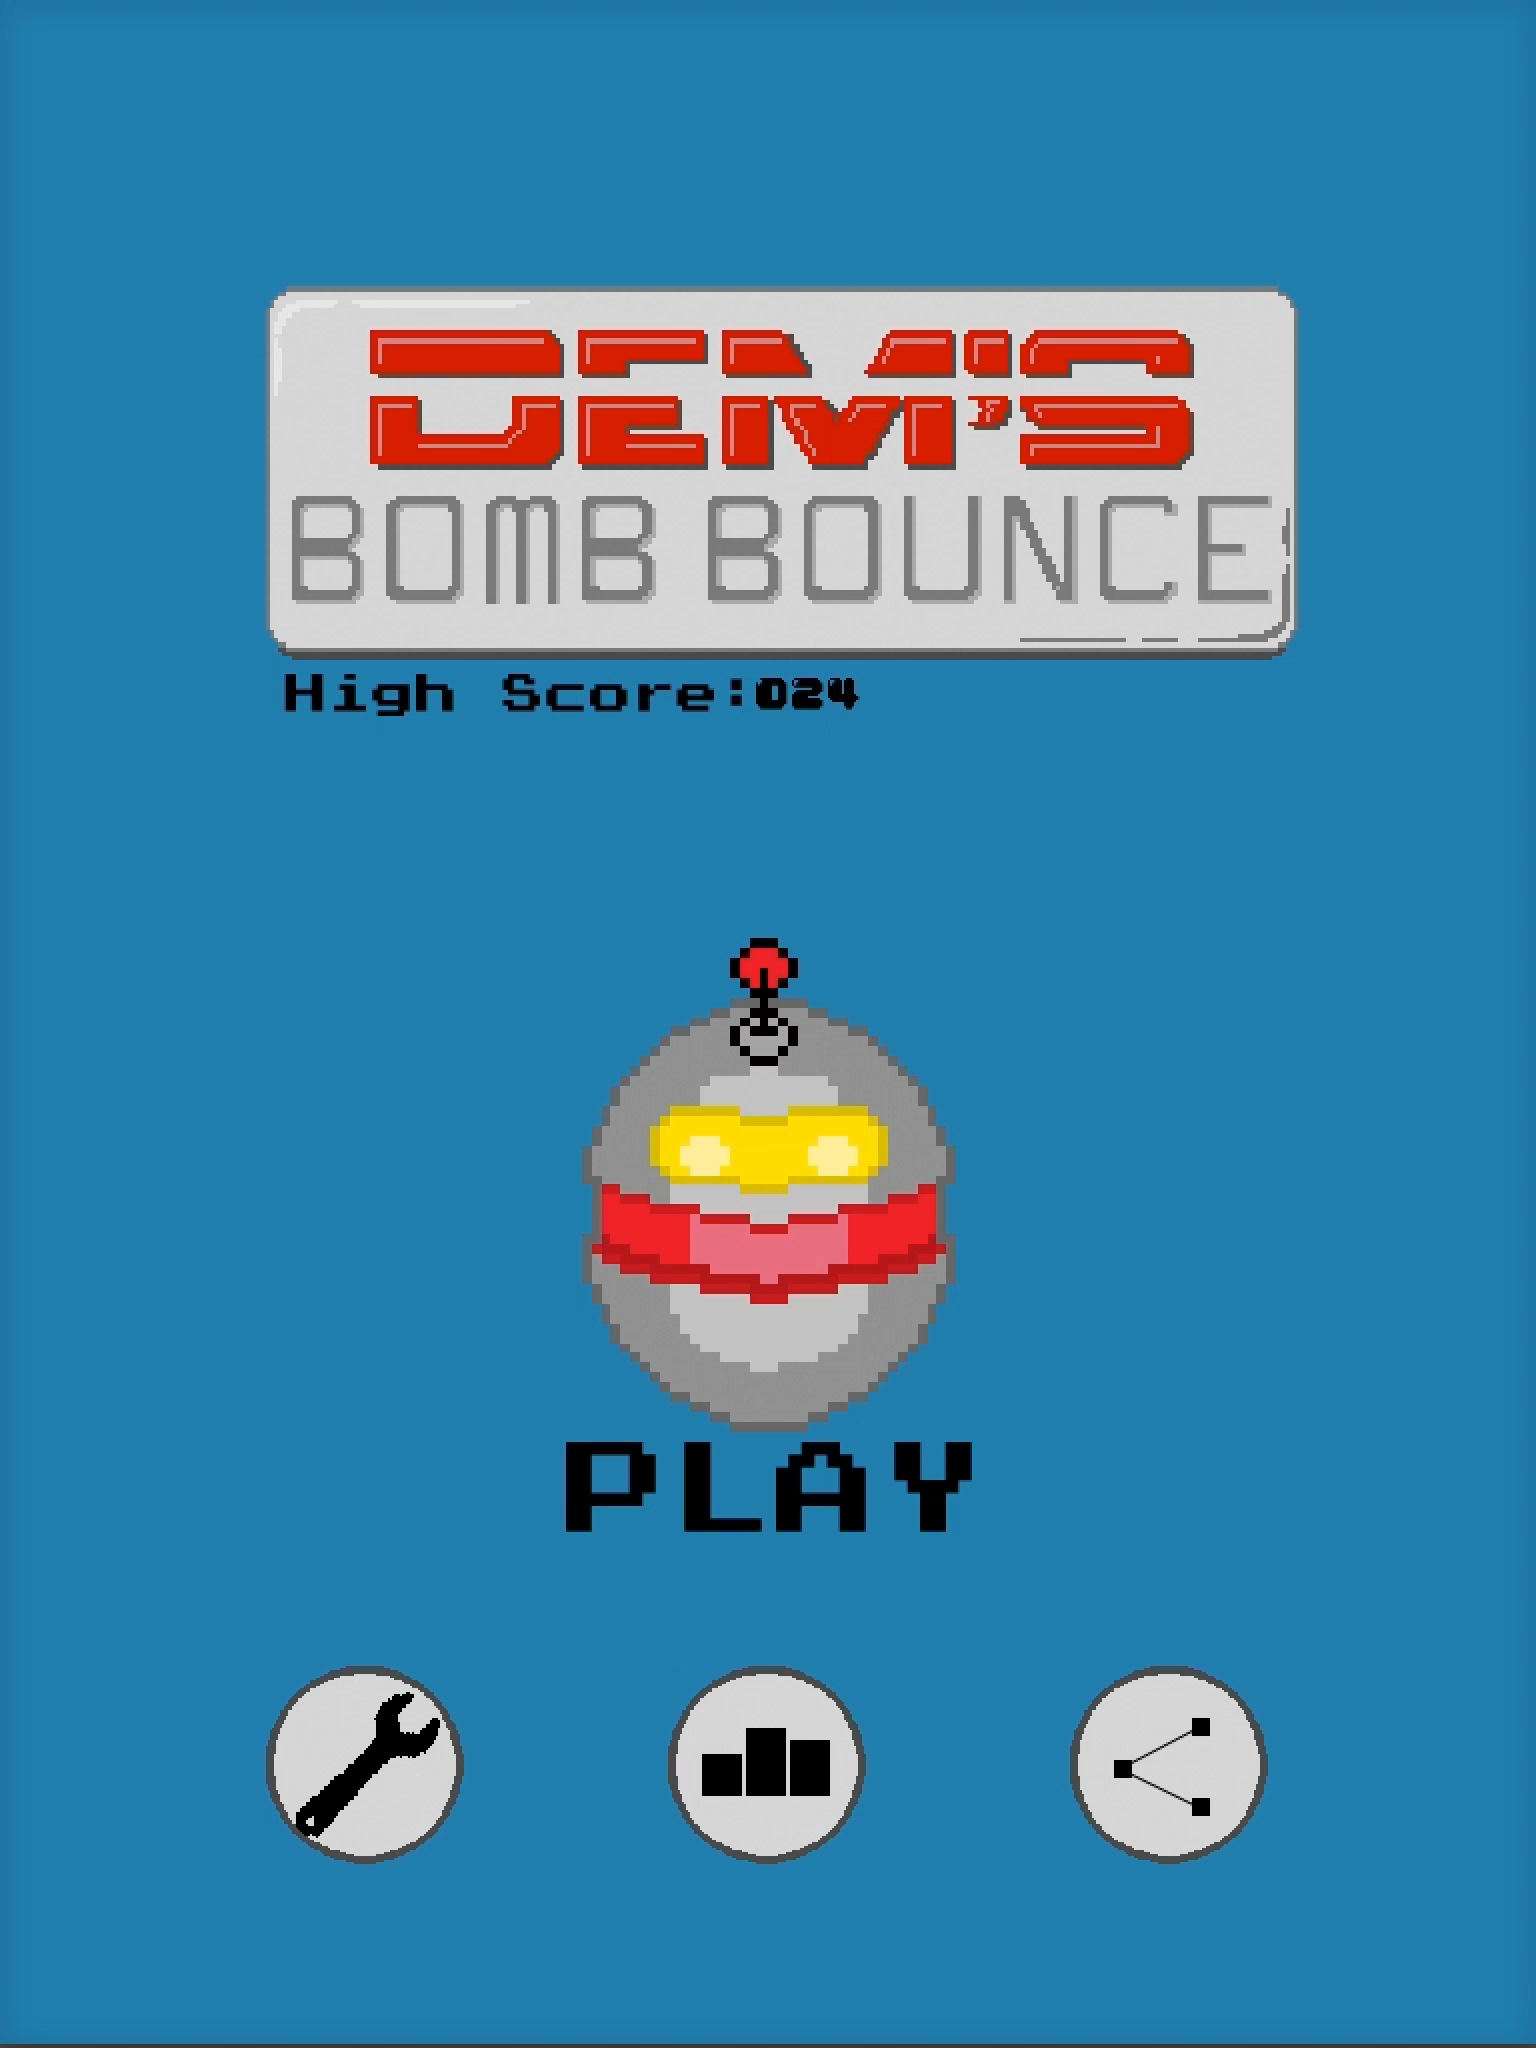 Dem's Bomb Bounce